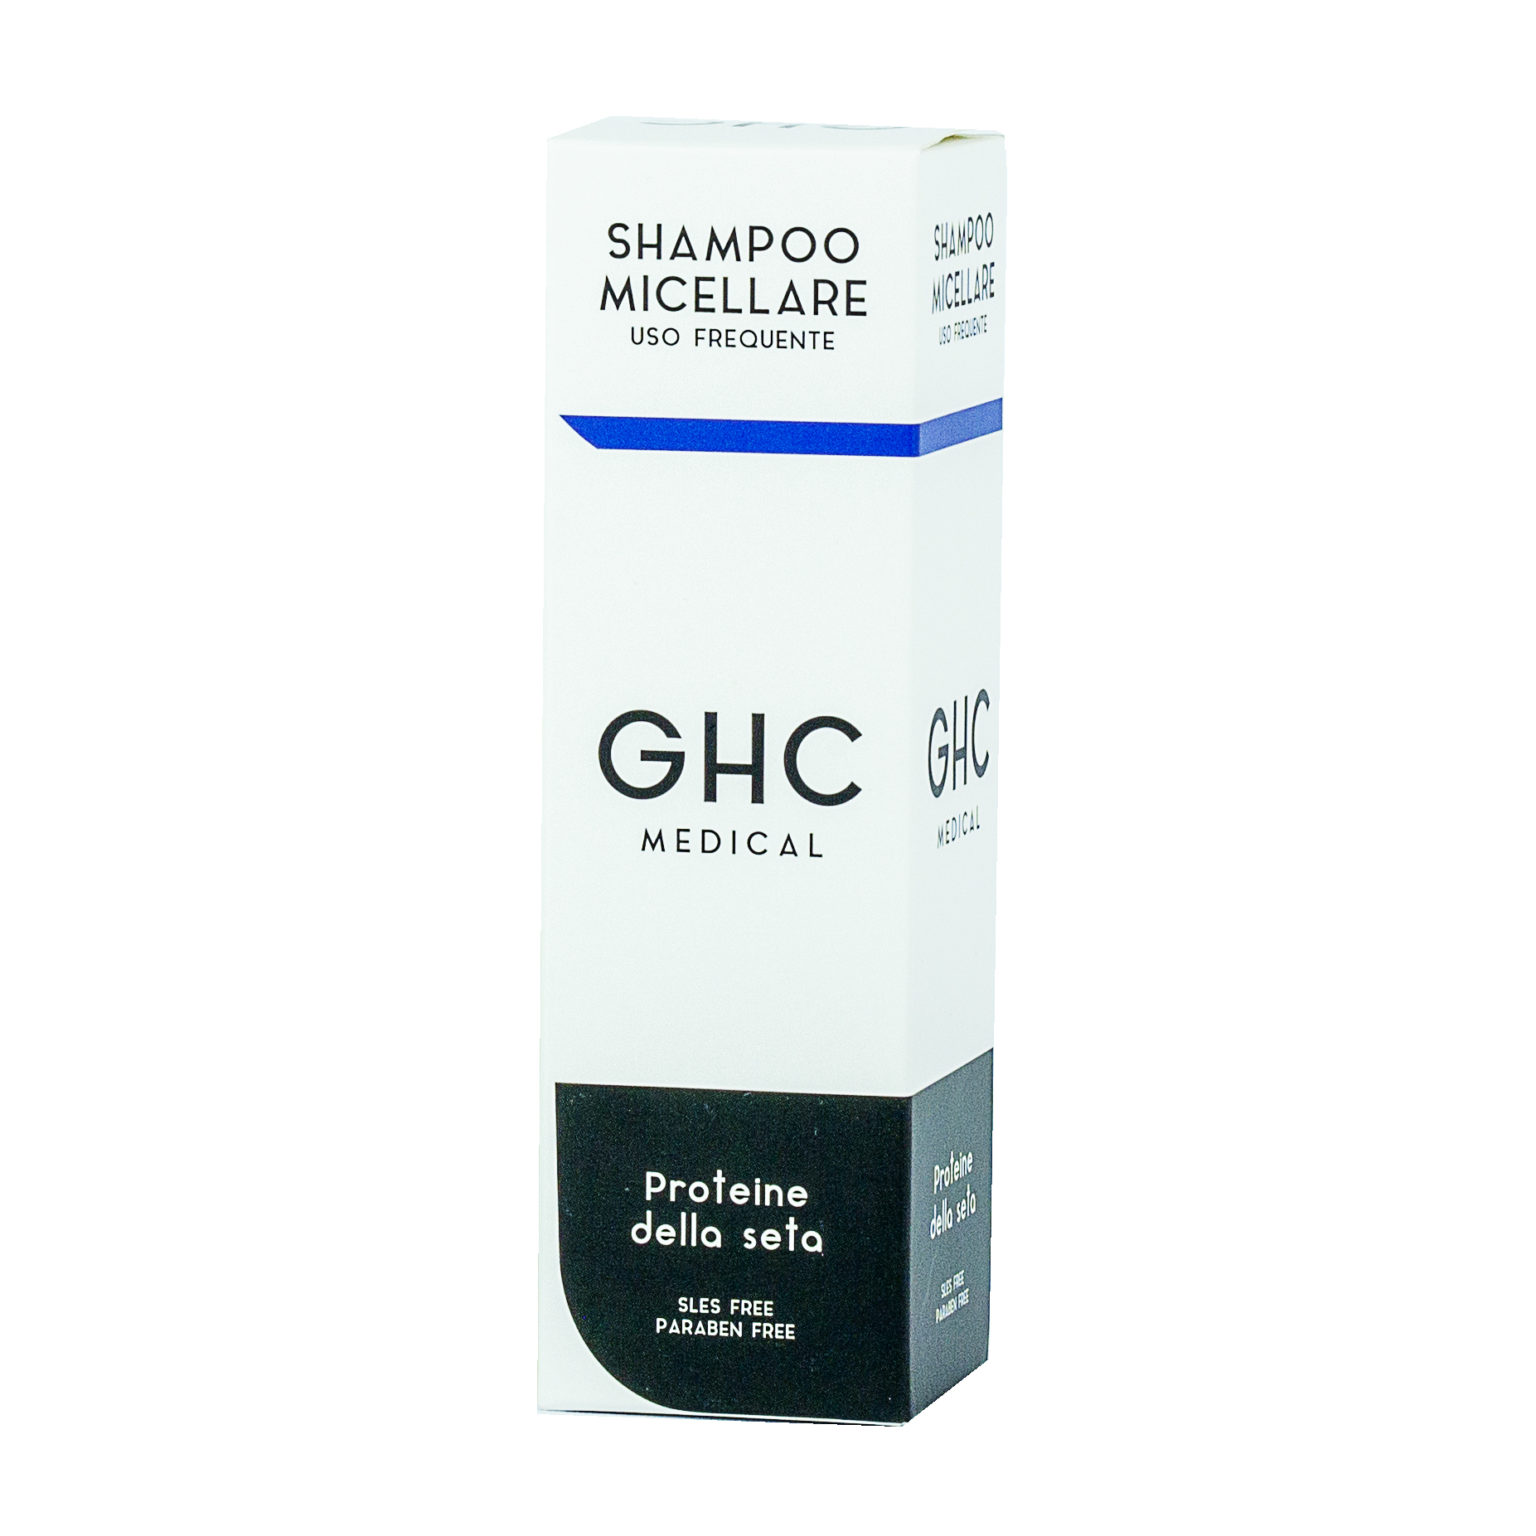 Image of Shampoo Micellare GHC MEDICAL 200ml